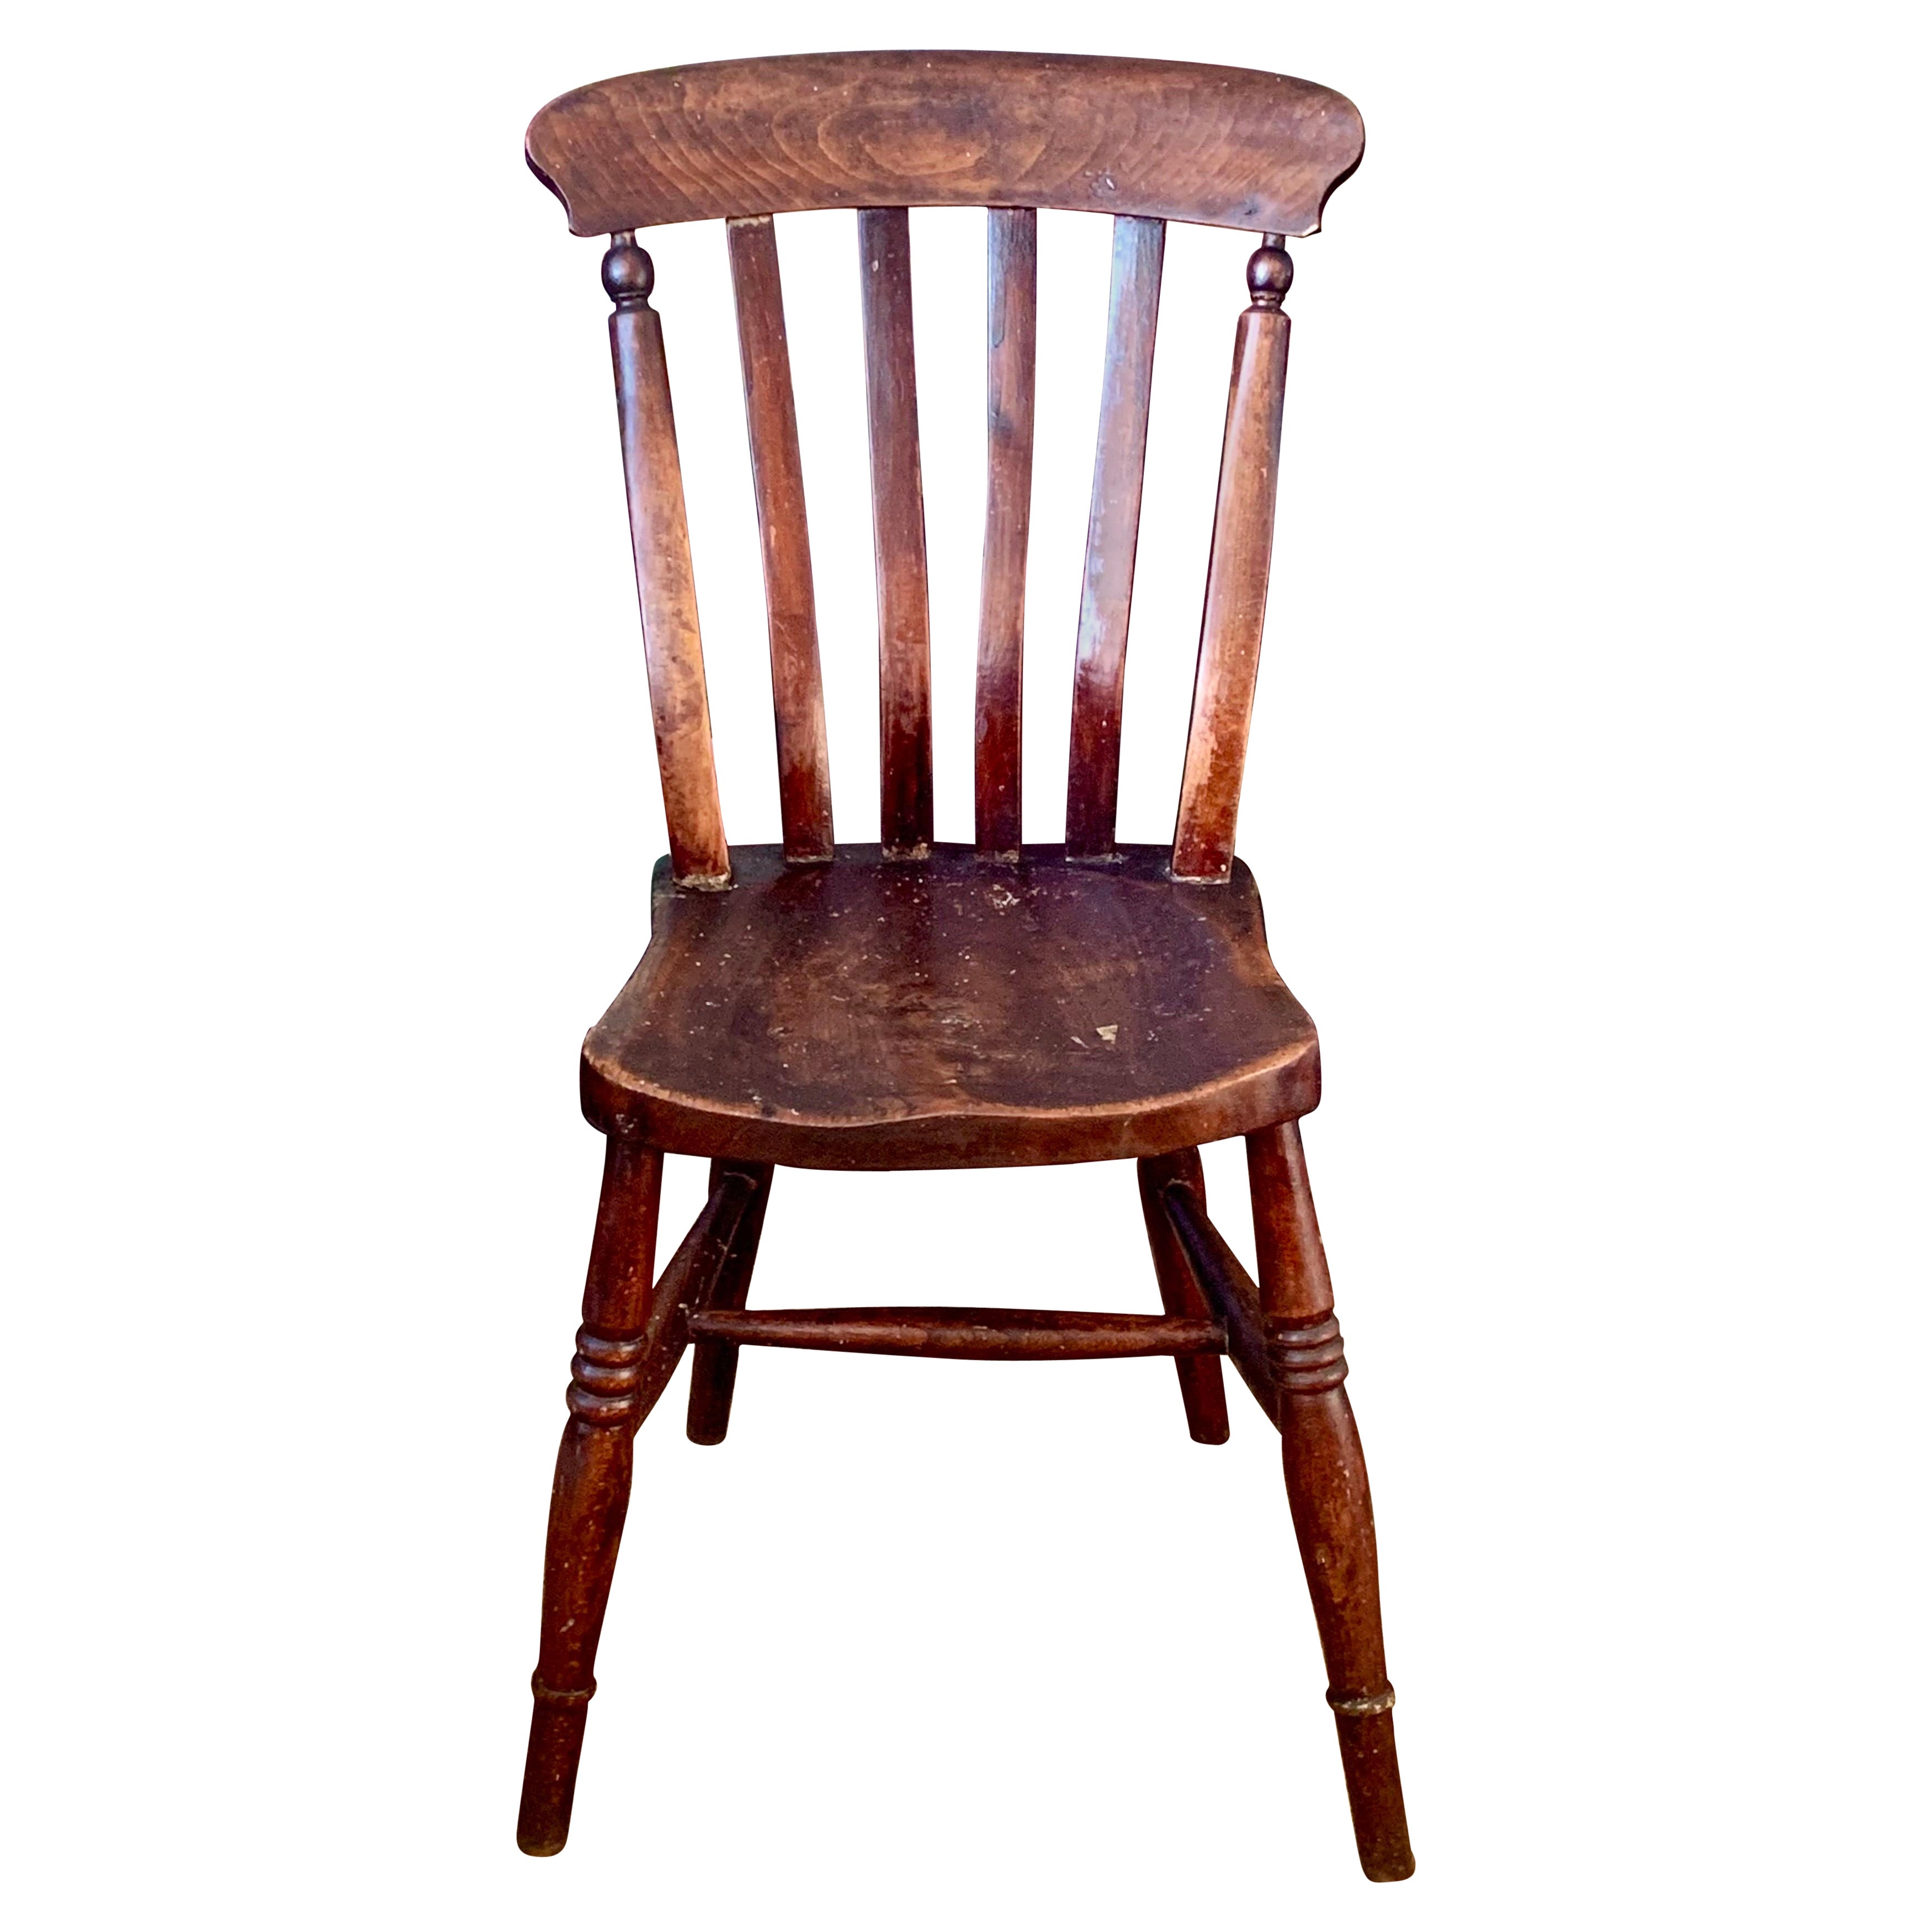 17th Century Quaker Style Chair